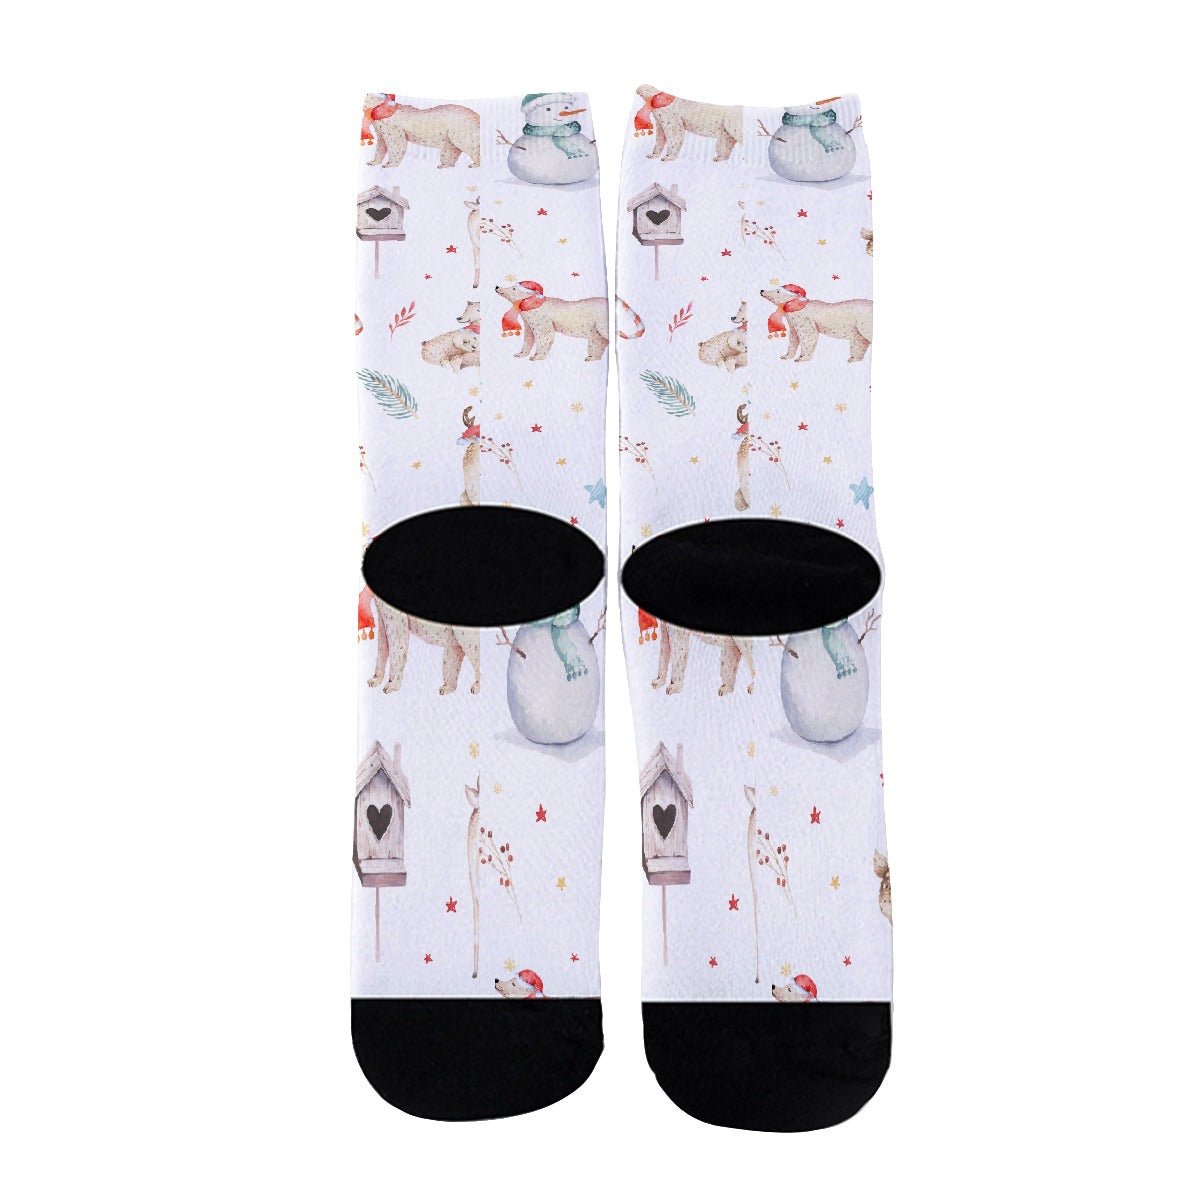 Unisex Long Socks - Natural Watercolour - Festive Style